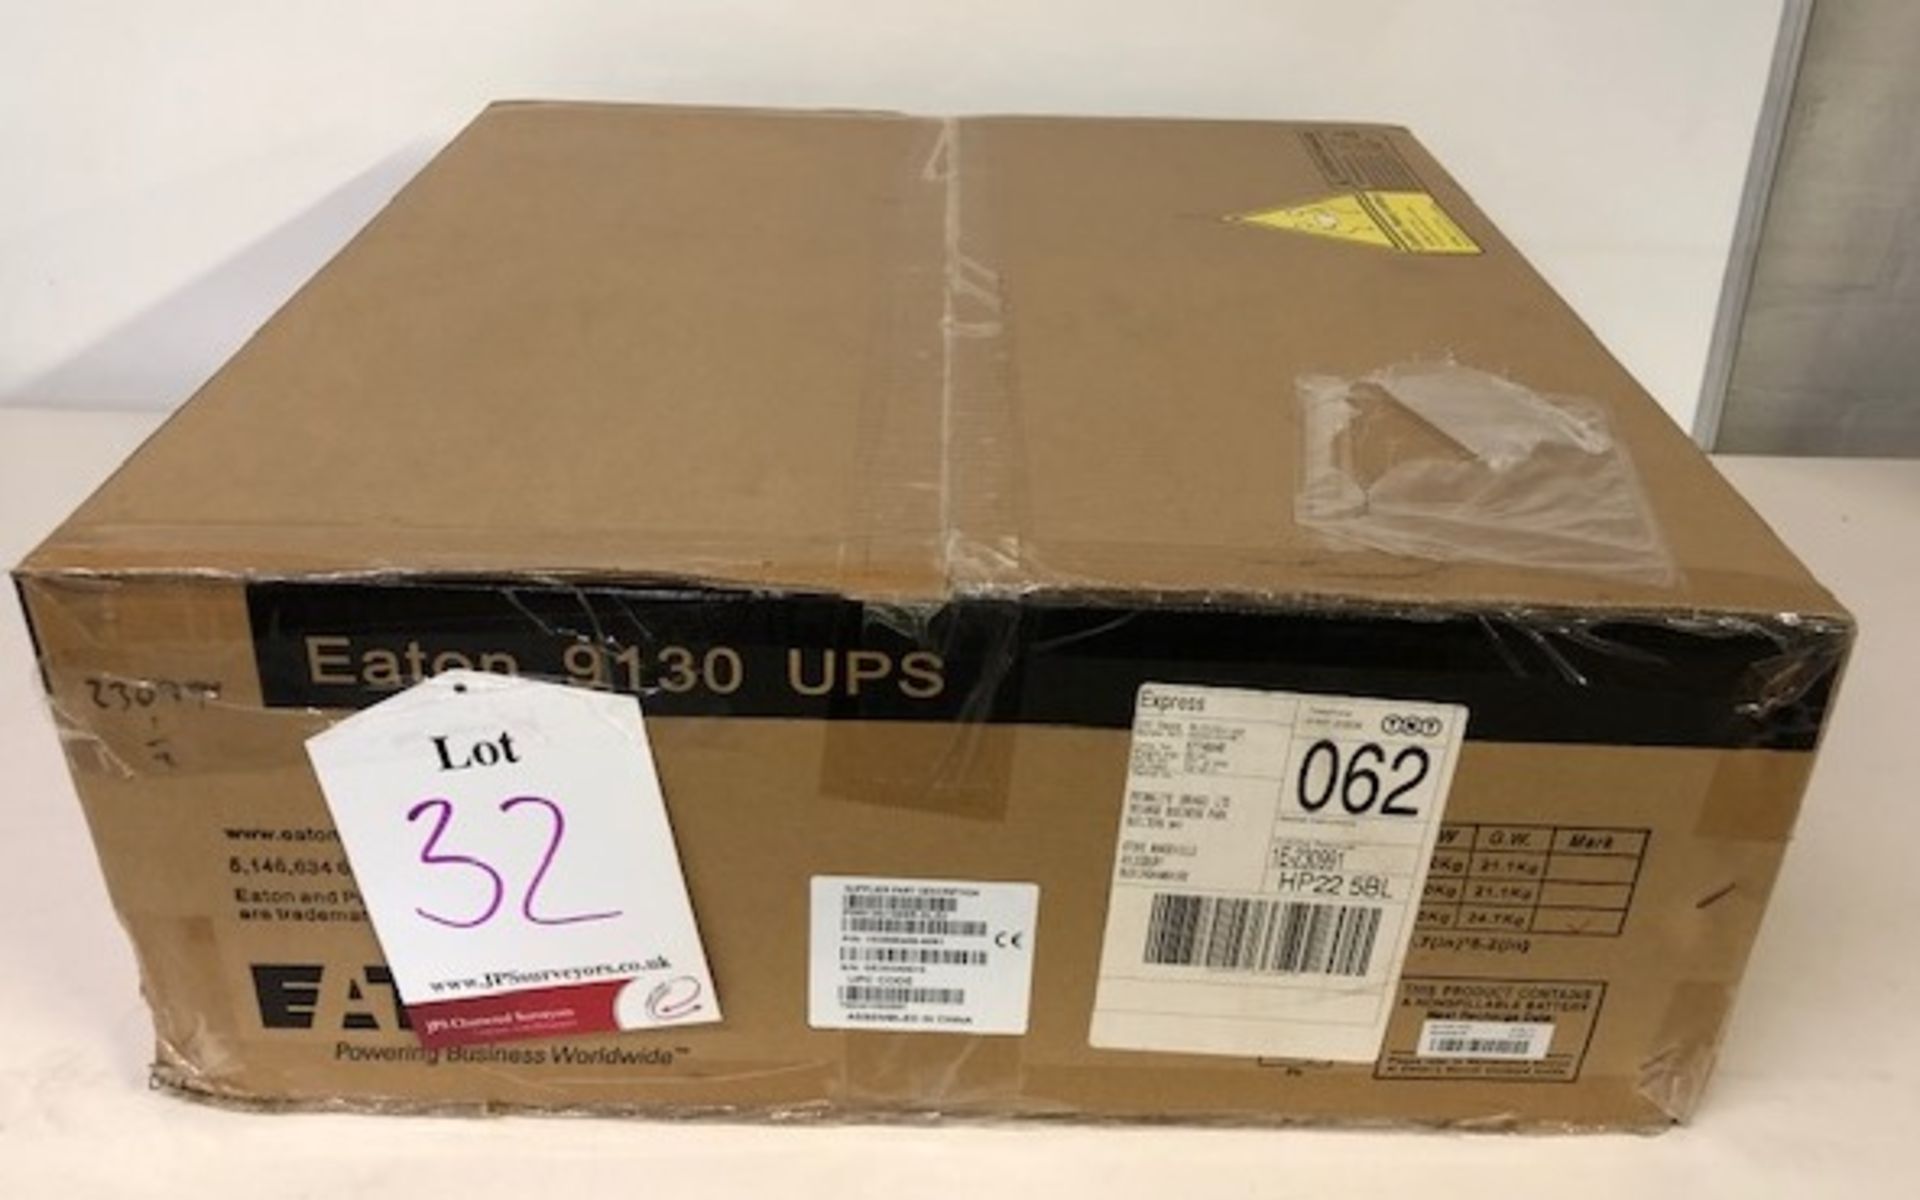 Eaton 5130 UPS Power Supply | IN BOX